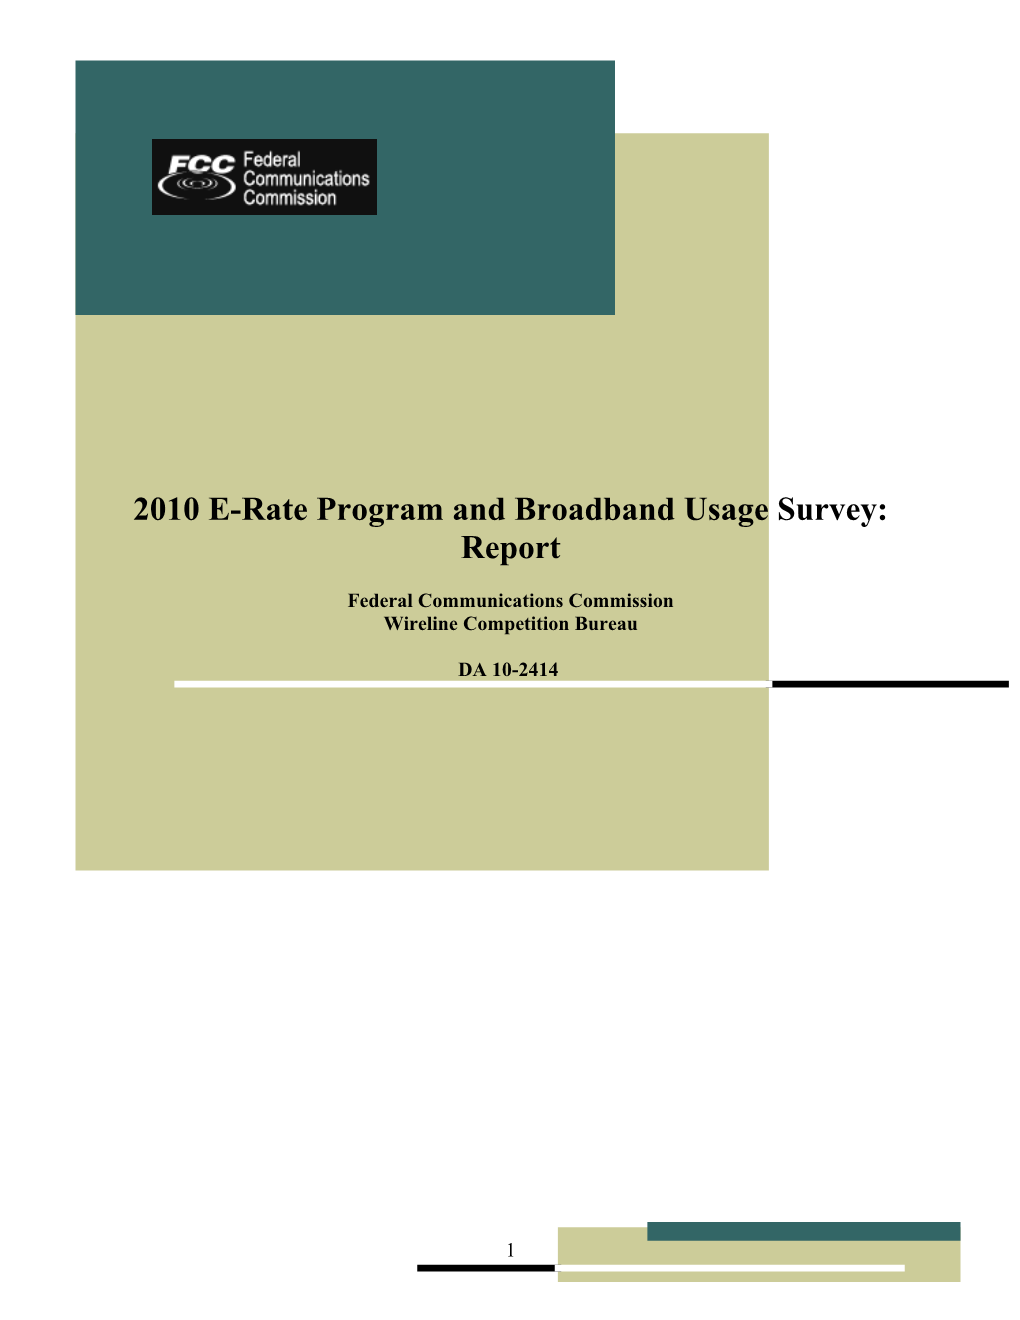 2010 E-Rate Program and Broadband Usage Survey: Report